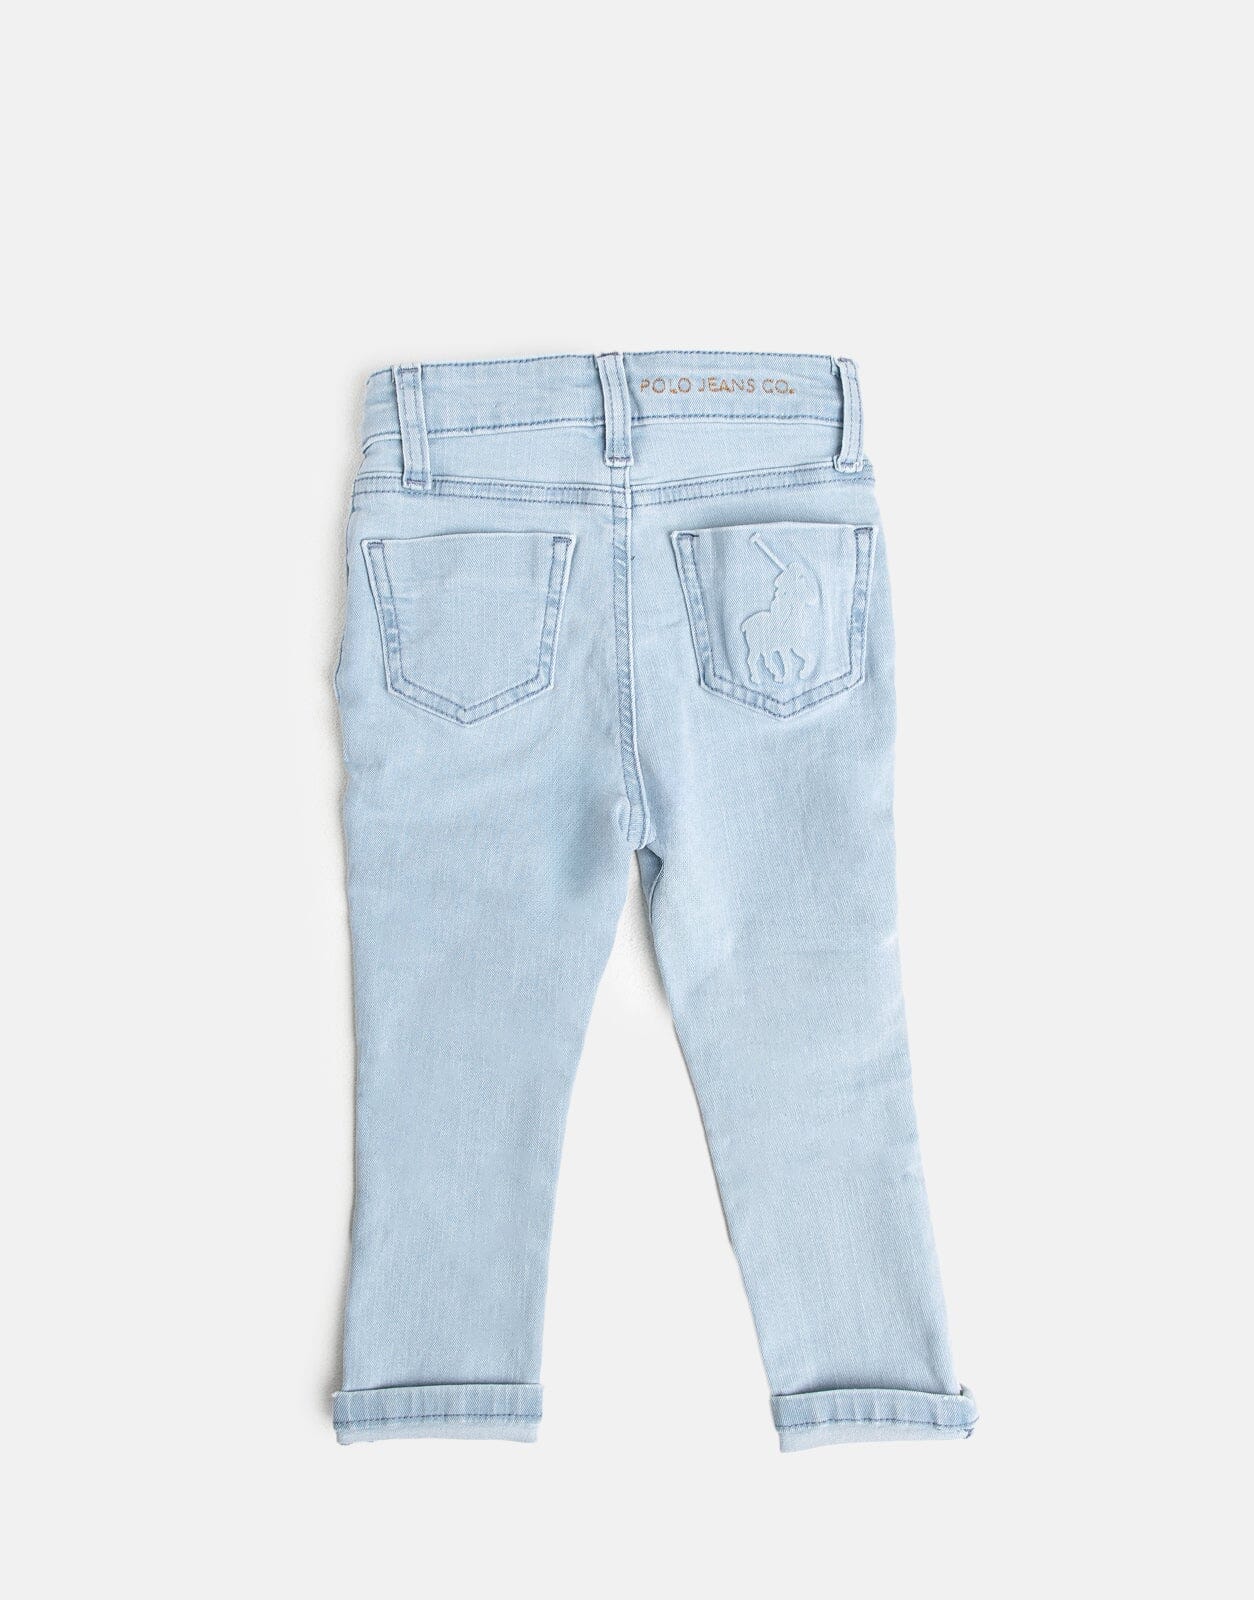 Polo Harper Skinny Jeans Light Wash - Subwear